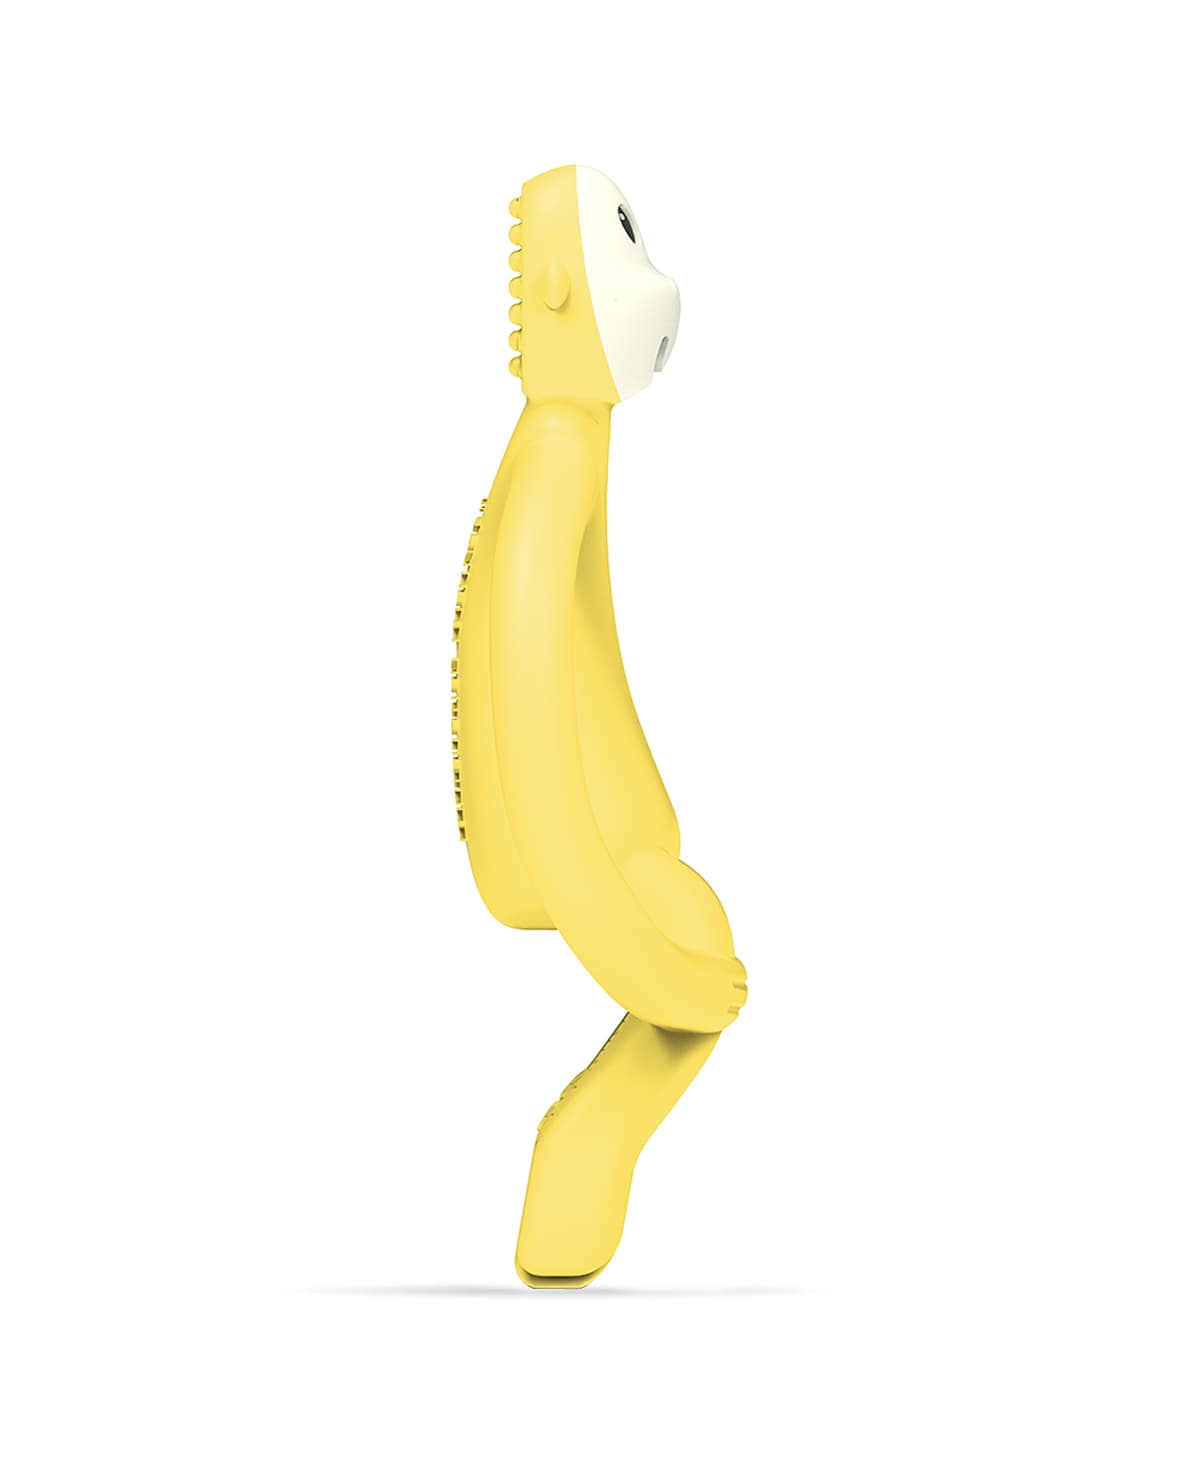 Matchstick Monkey Teething Toy v2 - Yellow